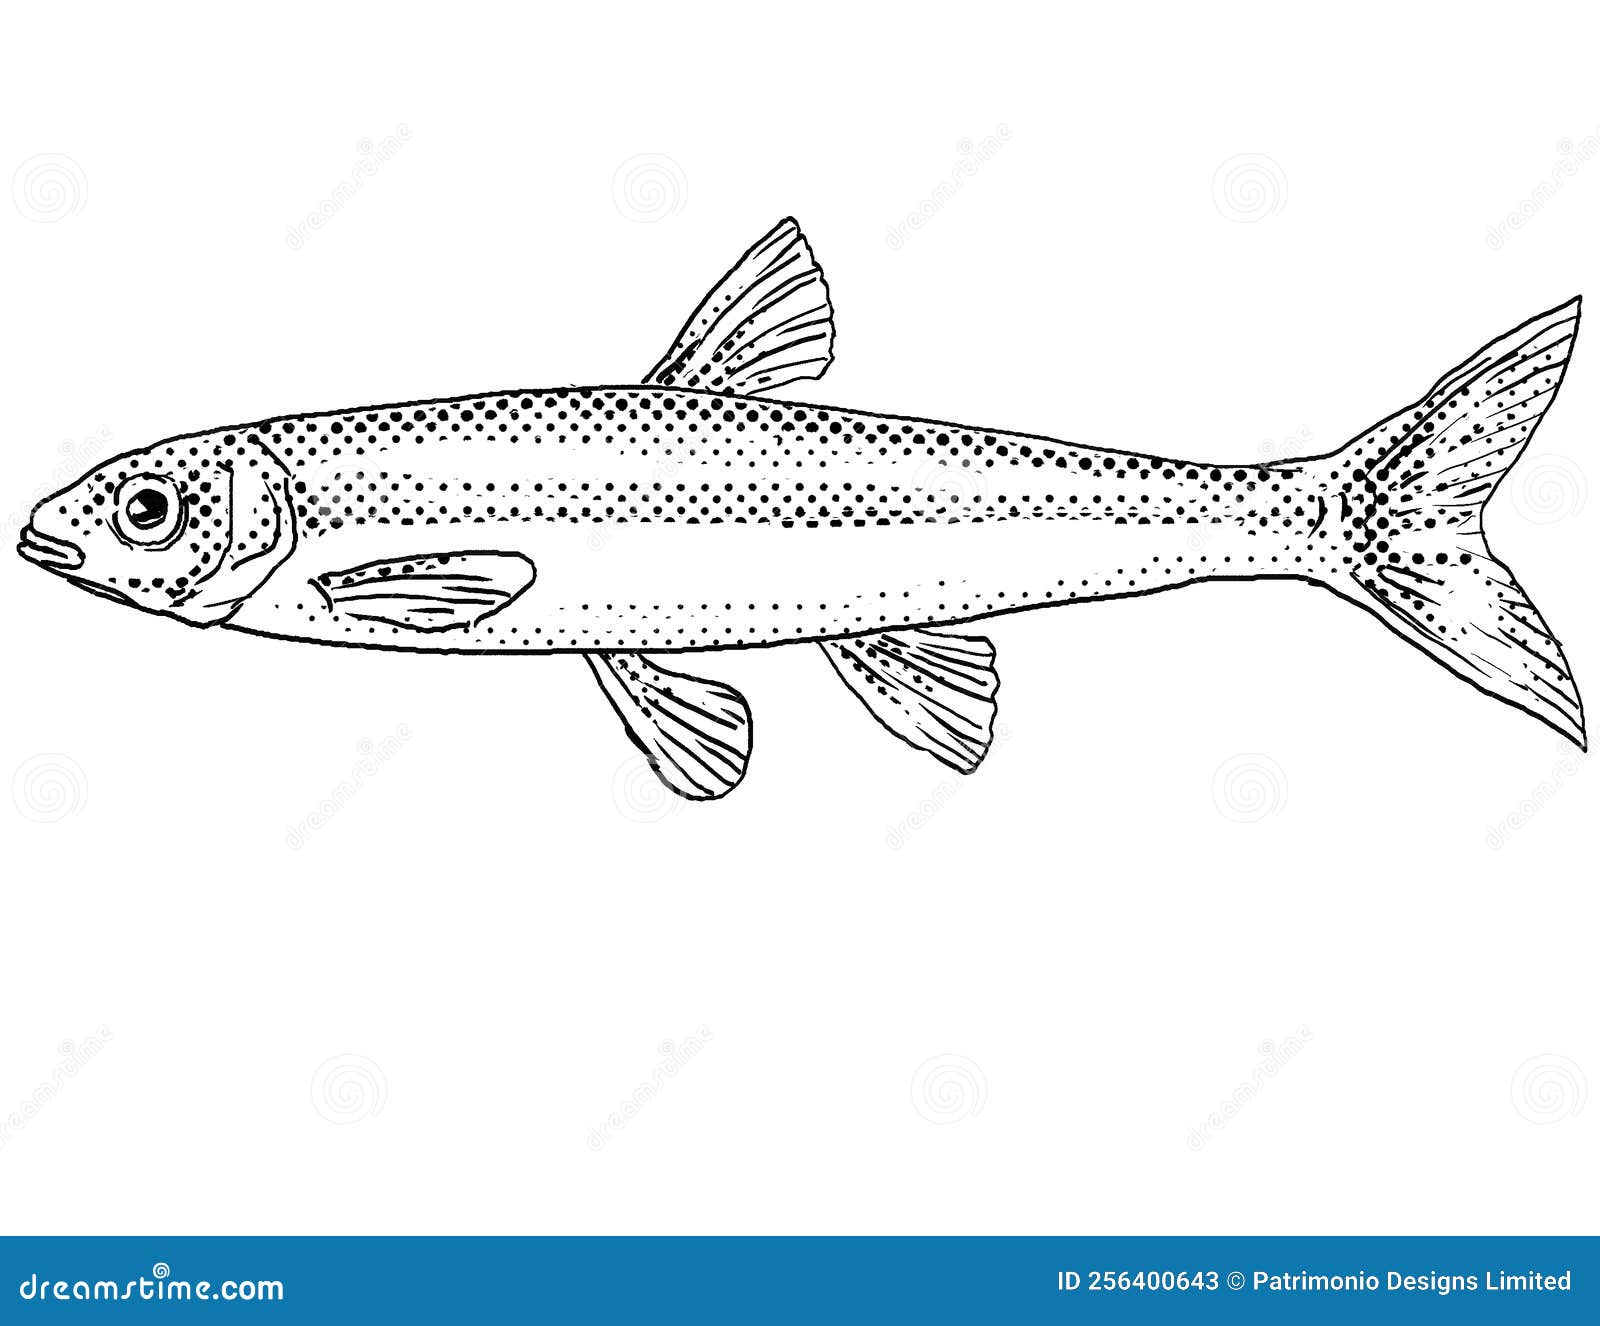 mimic shiner or notropis volucellus freshwater fish cartoon drawing